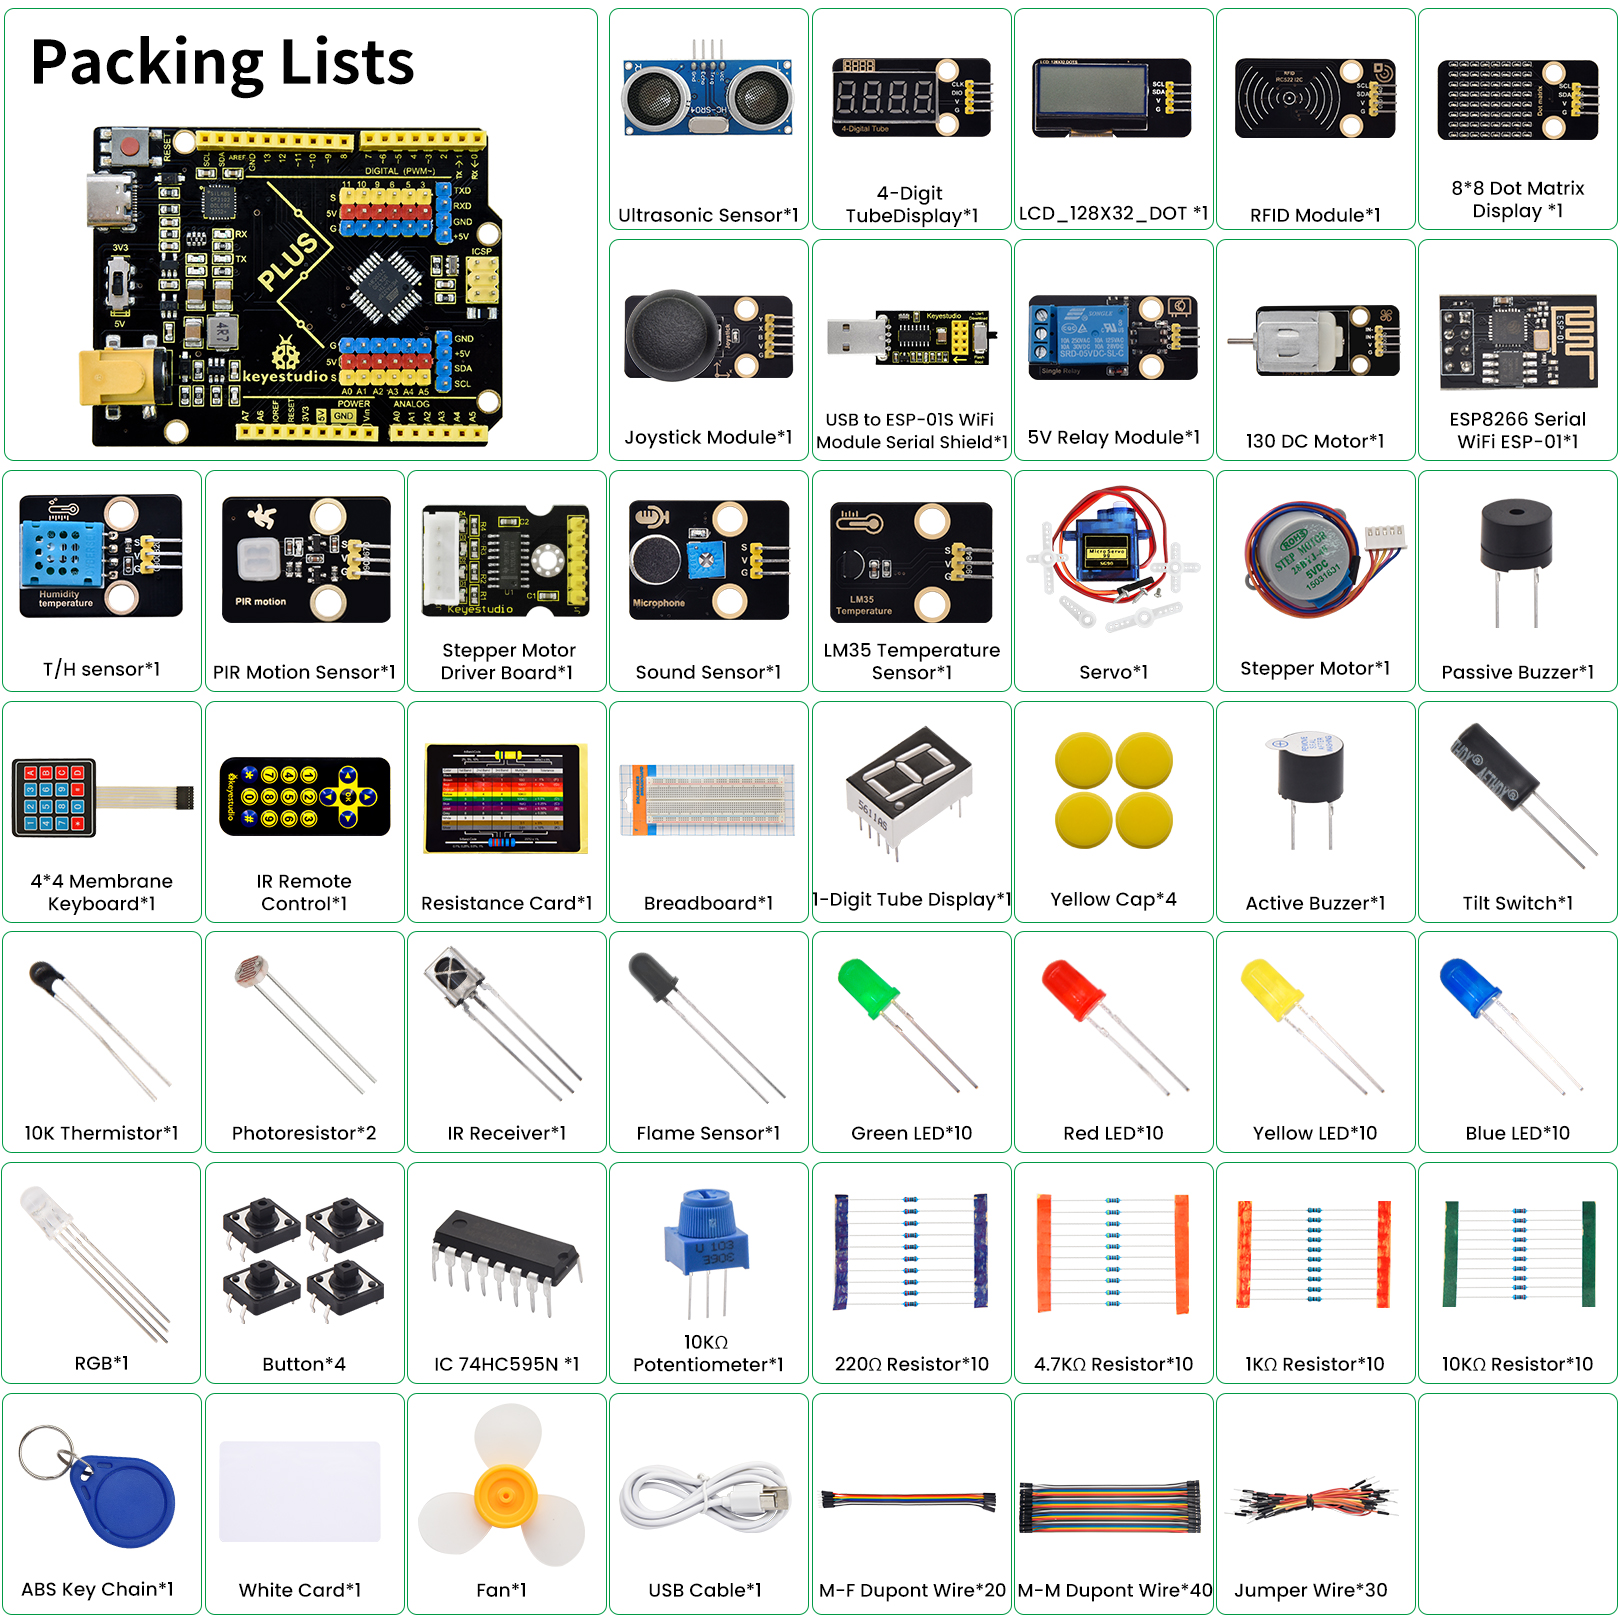 Keyestudio Upgraded Complete IOT Starter Kit For Arduino Starter Kit DIY  Scratch Graphical Programming Electronics Kit 32Project